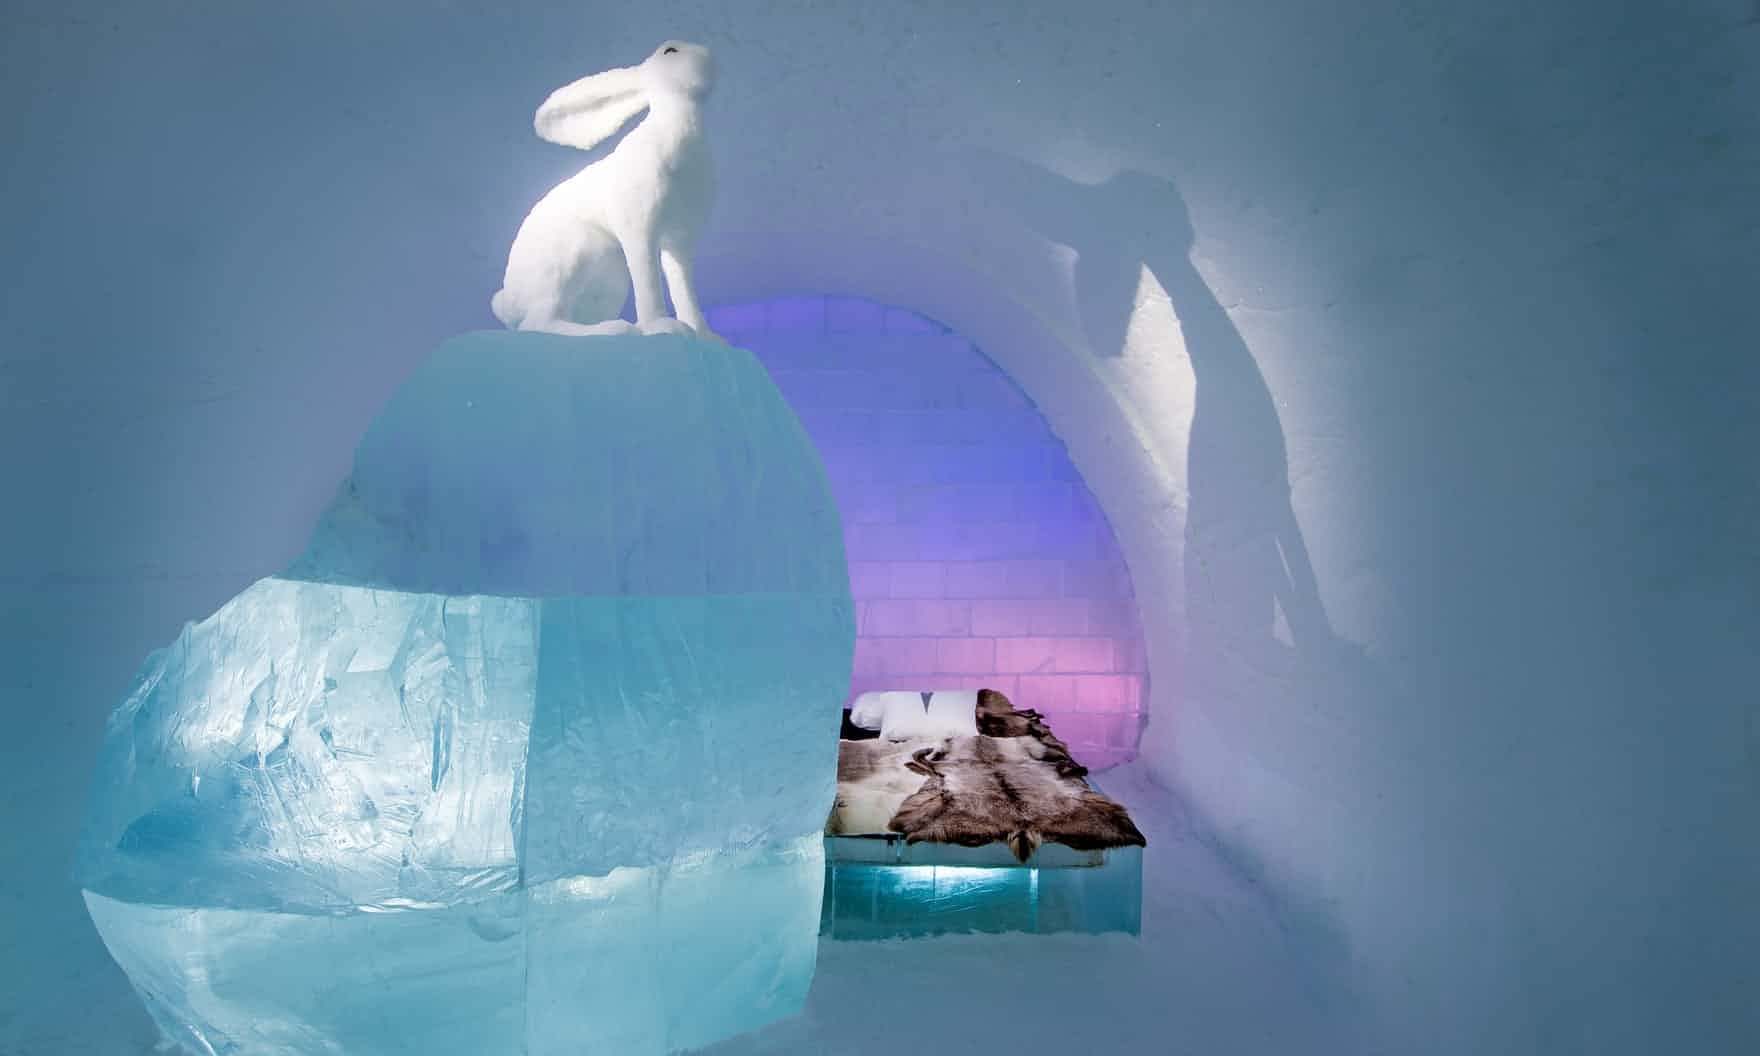 De Follow the White Rabbit-suite ontsproot uit het brein van AnnaSofia Mååg en Niklas Byman. Foto: Asaf Klinger/IceHotel